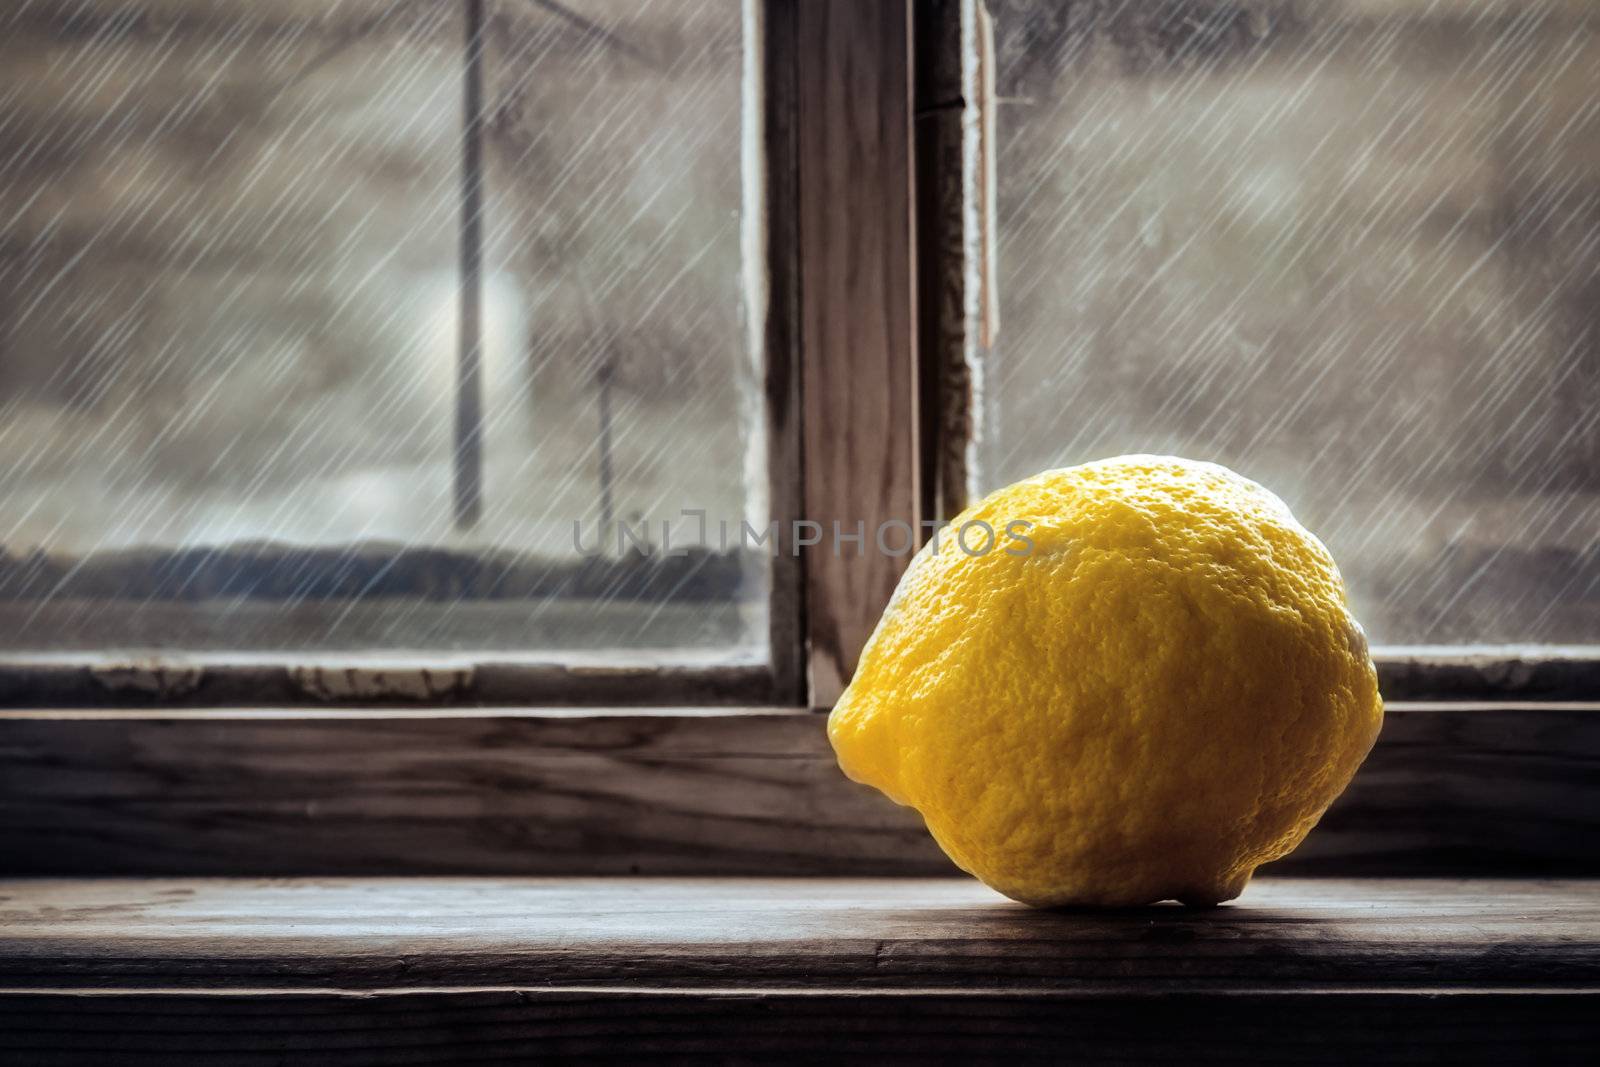 Single lemon sitting on threshold of a rustic window